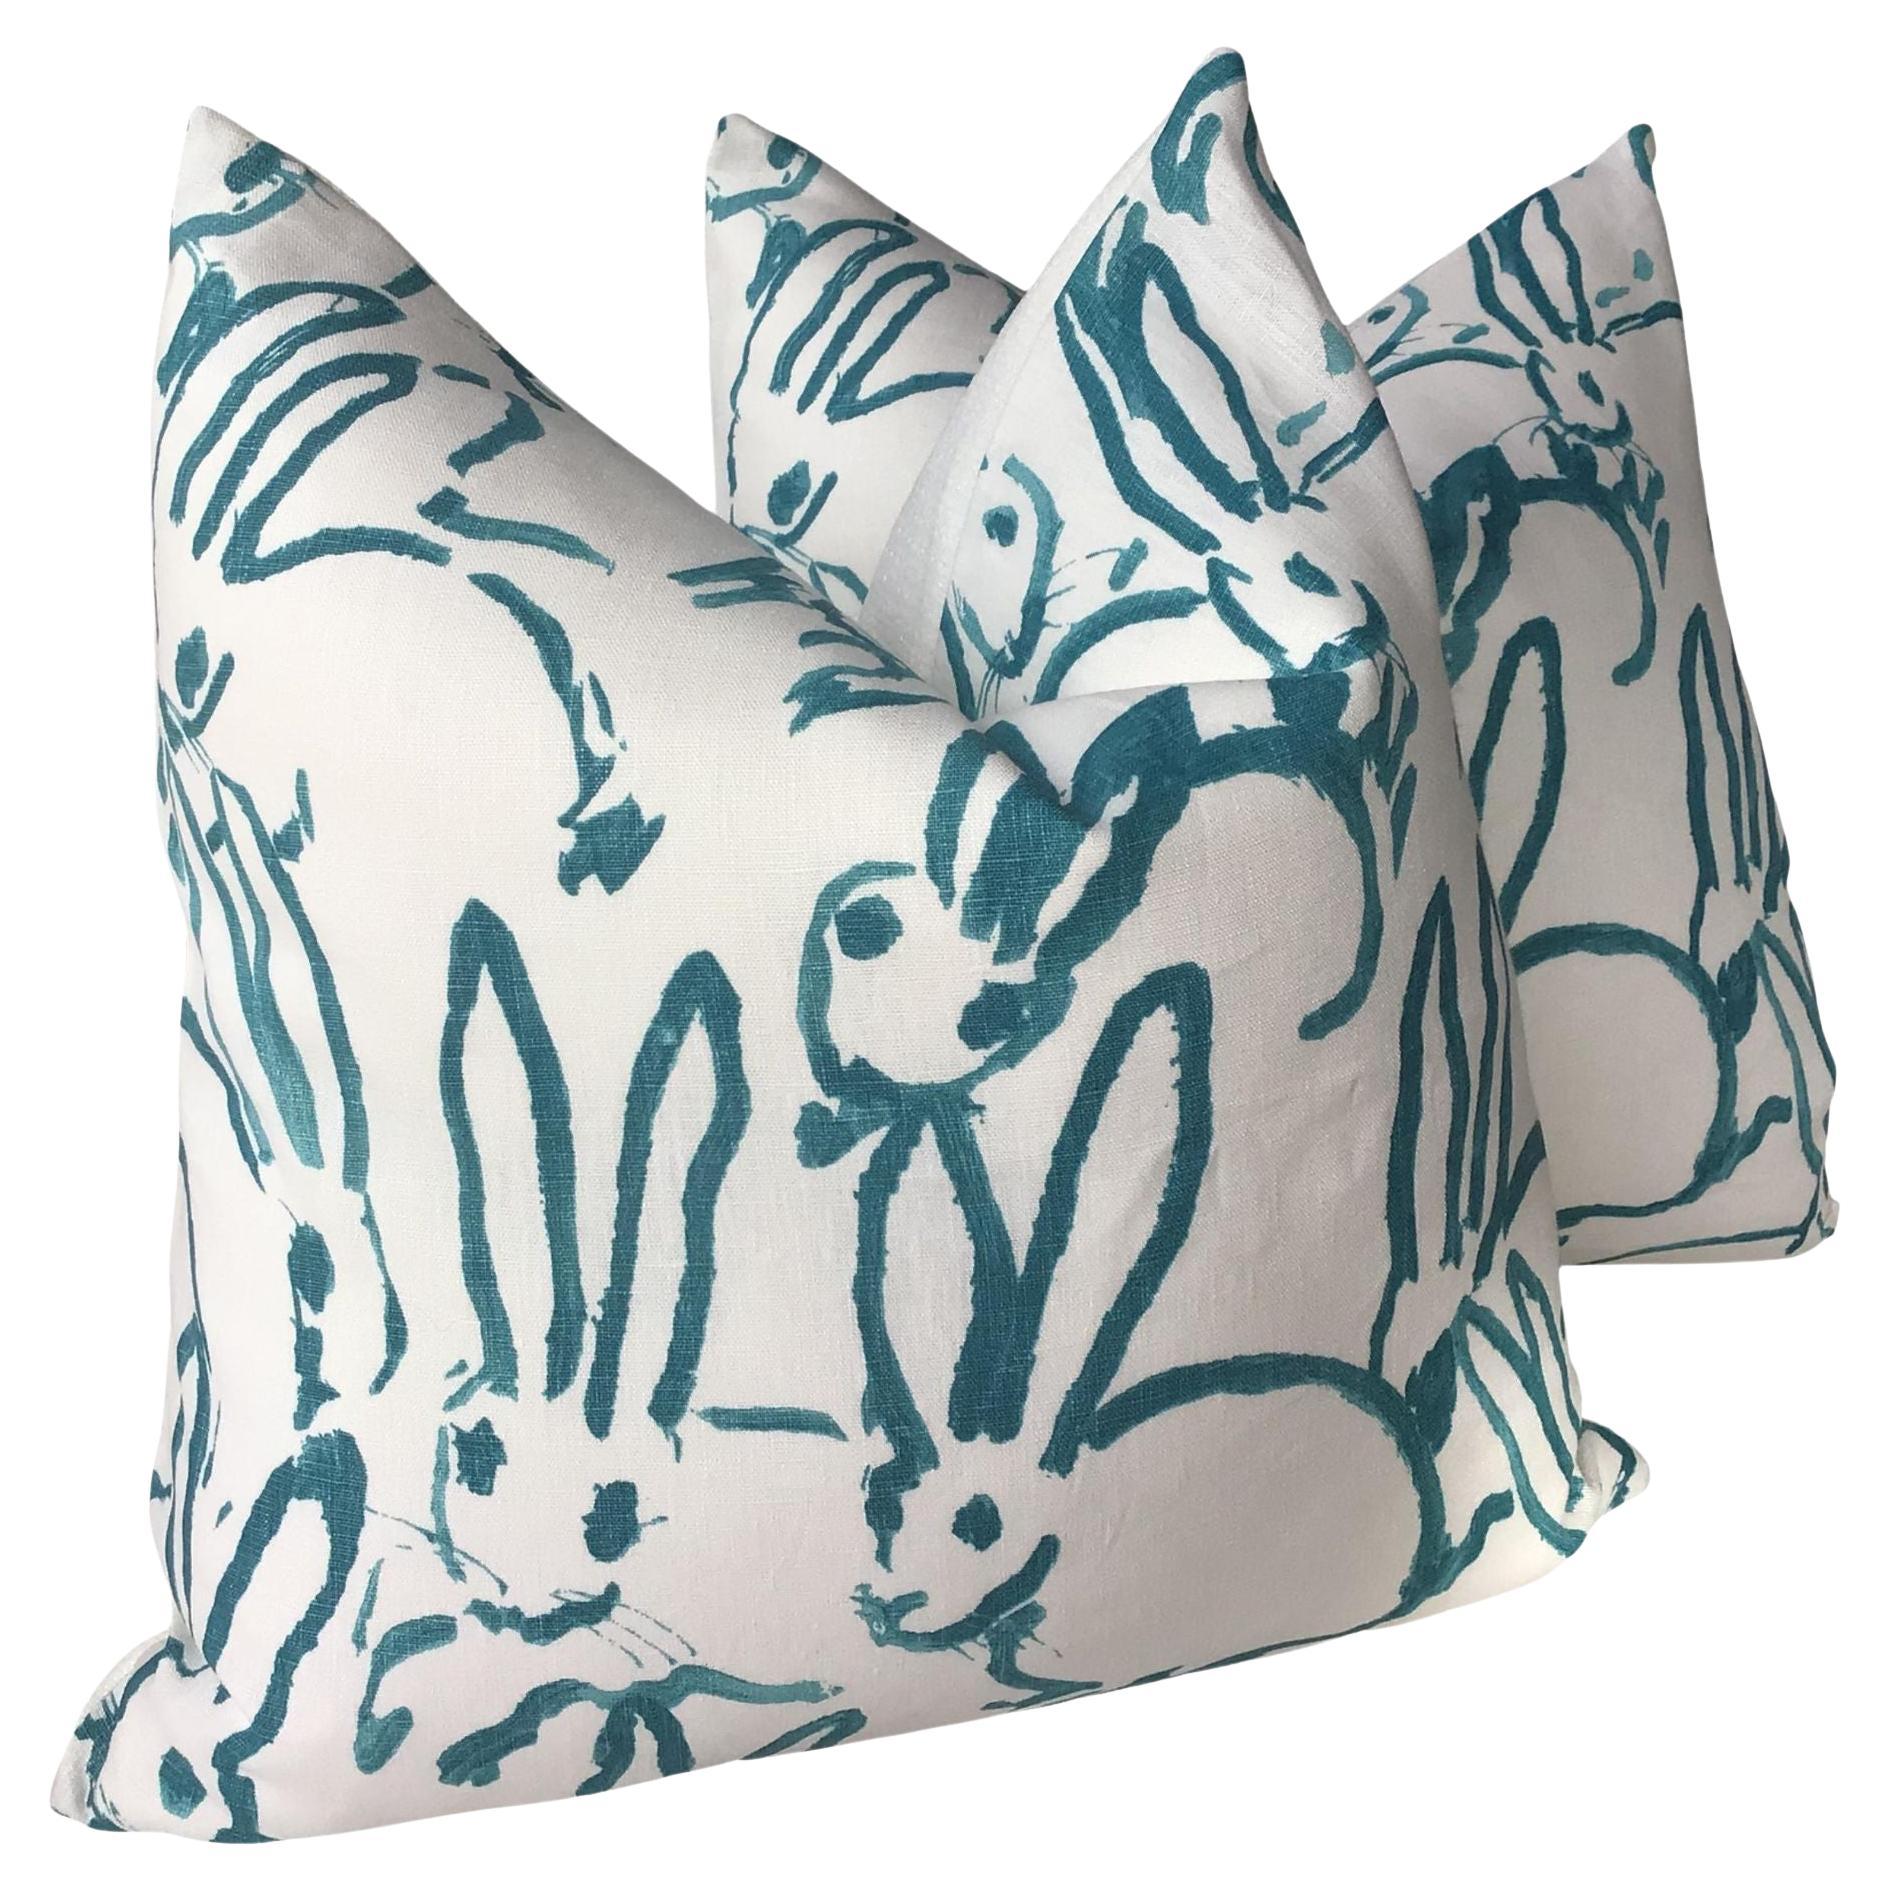 Hunt Slonen “Bunny Hutch” in Aqua 22” Down Filled Pillows - a Pair